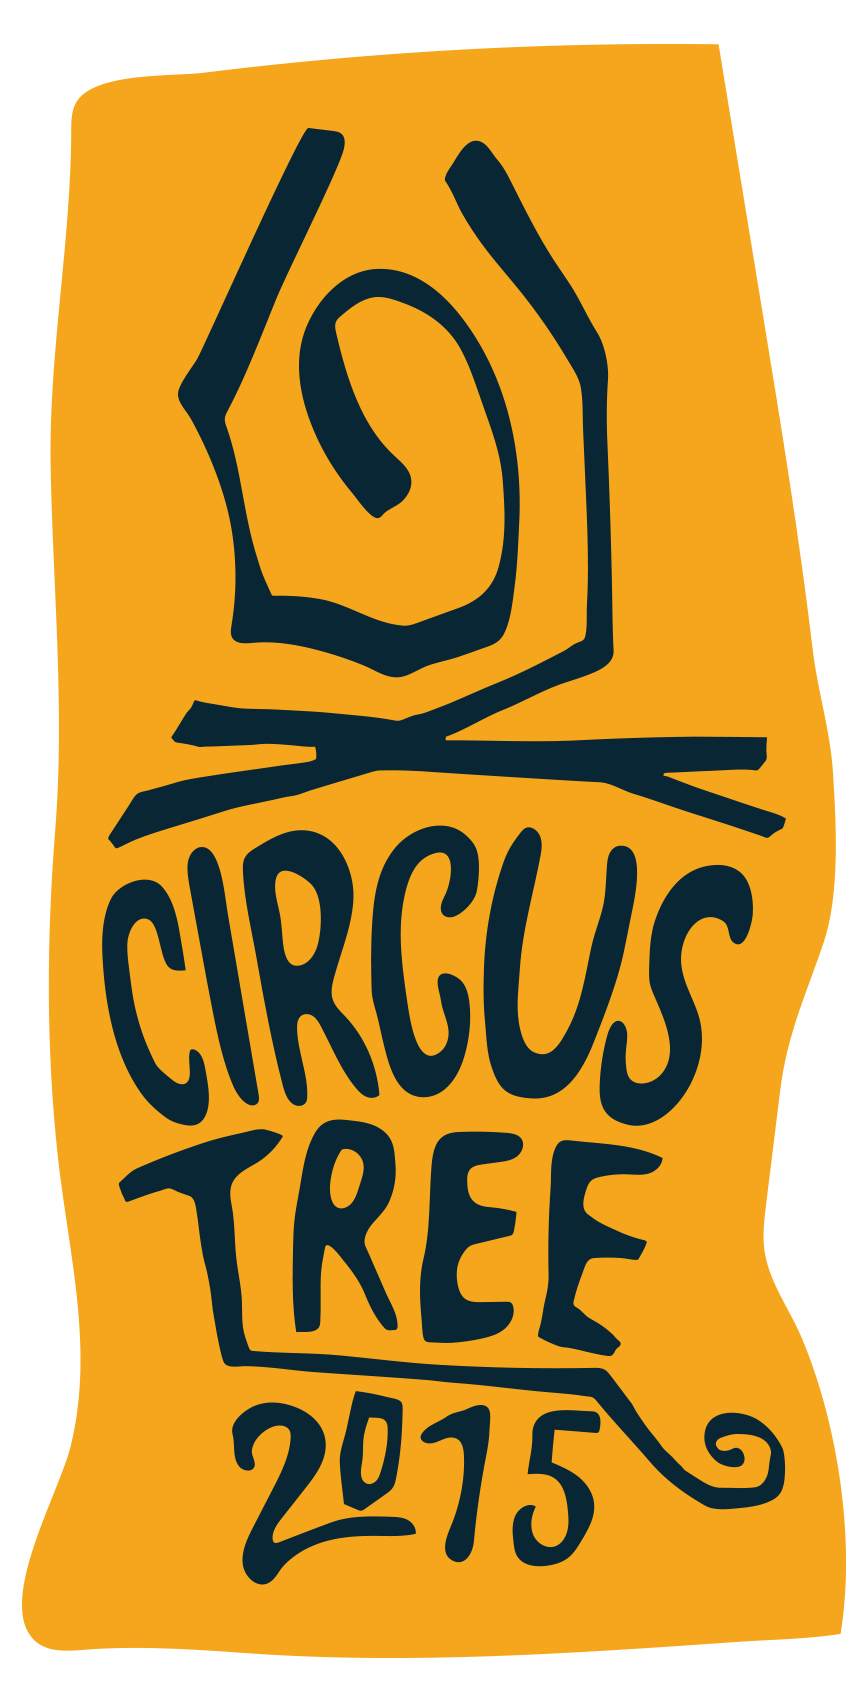 Circus Tree 2015